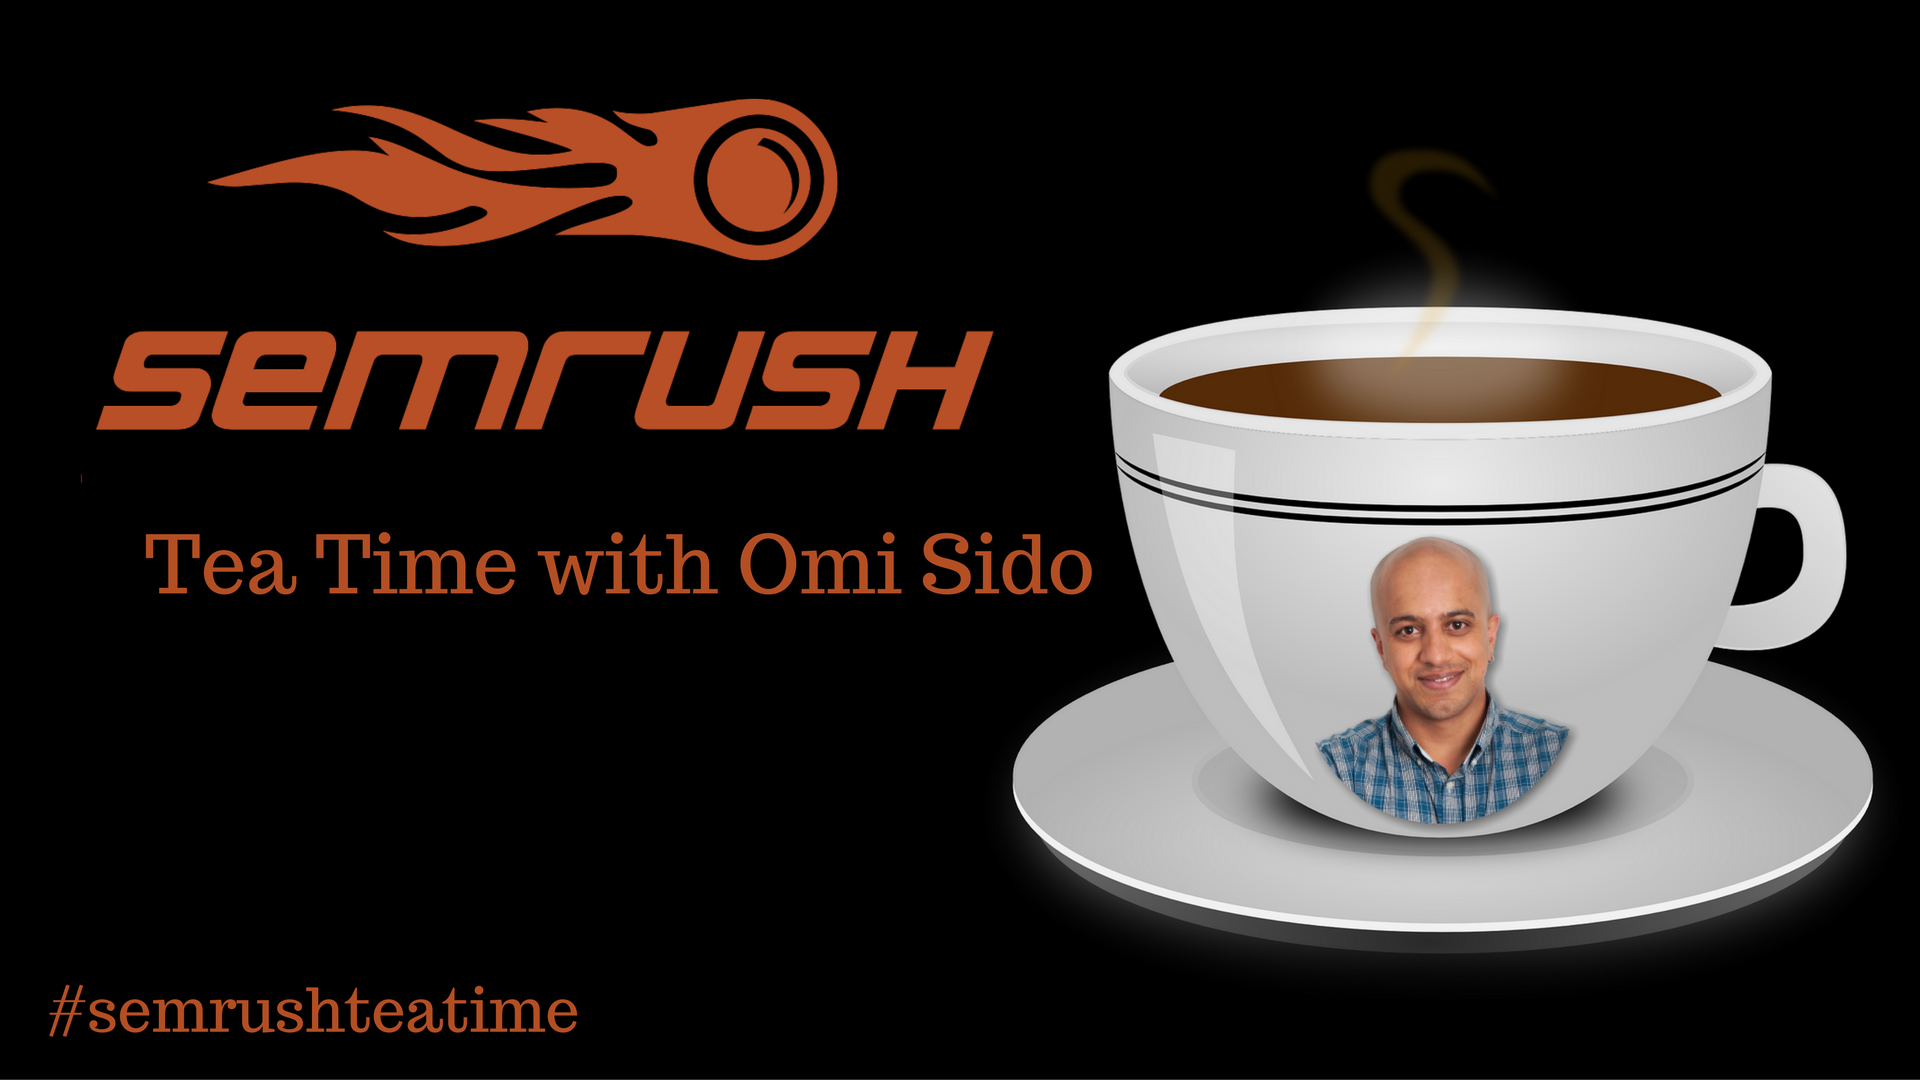 Semrushteatime with Omi Sido